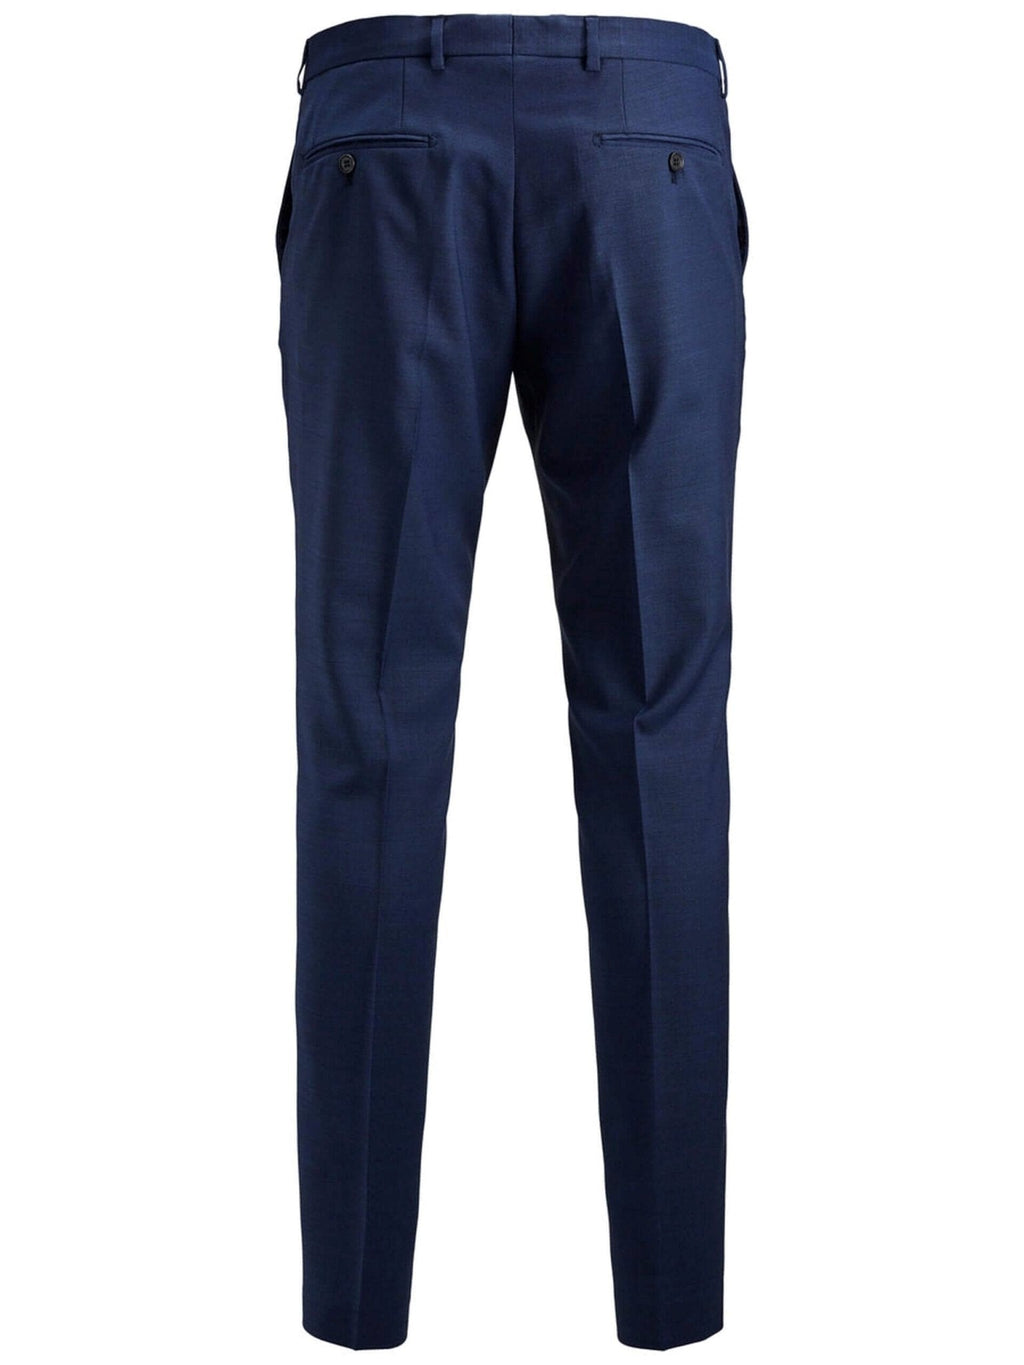 Pantalones clásicos de traje Slimfit - Azul medieval